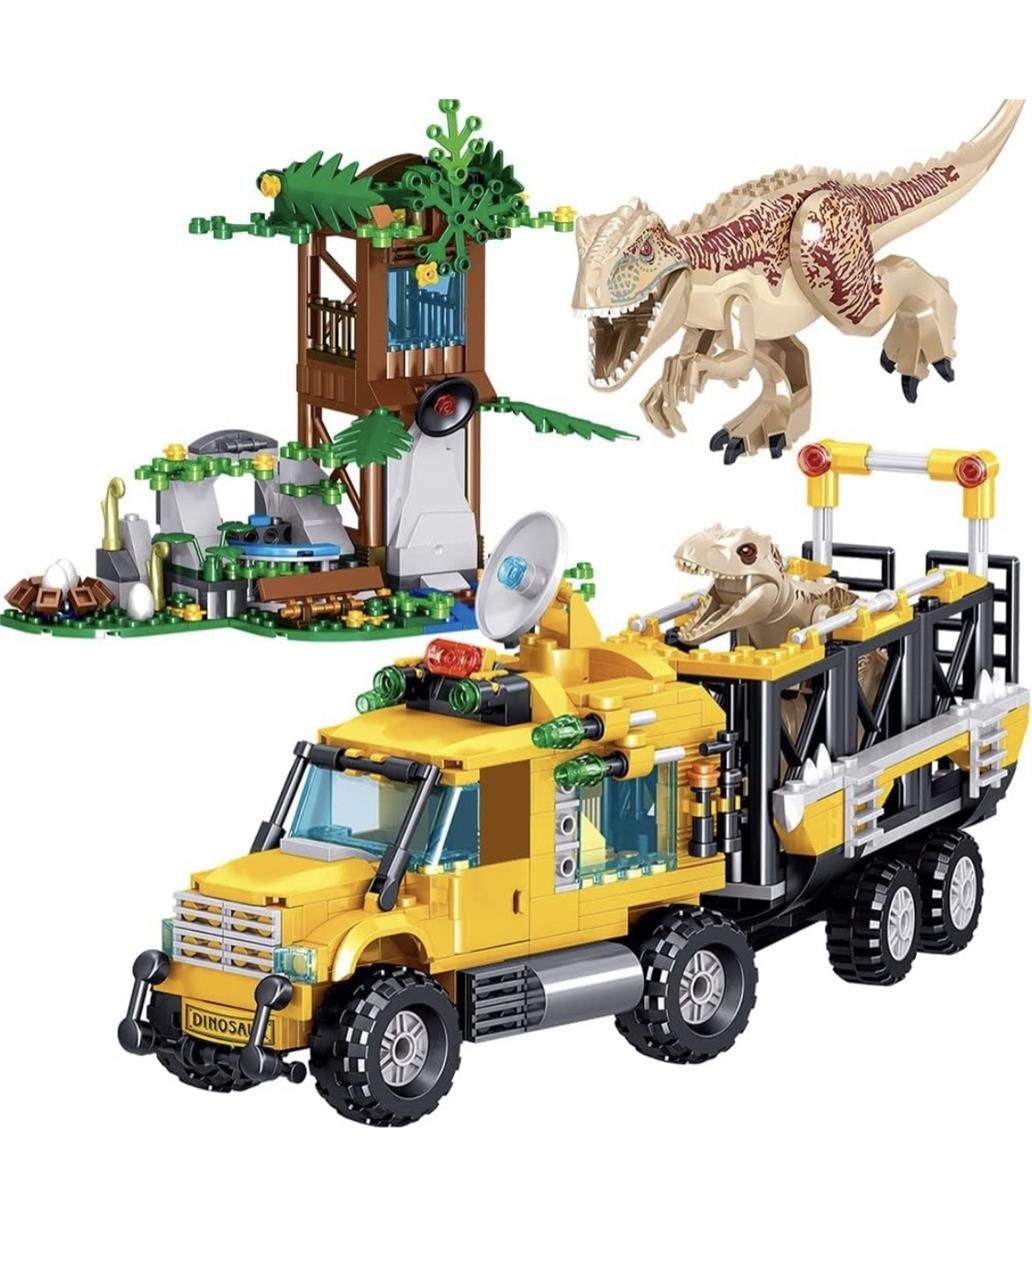 Mesiondy Dinosaurs Building Blocks Set,